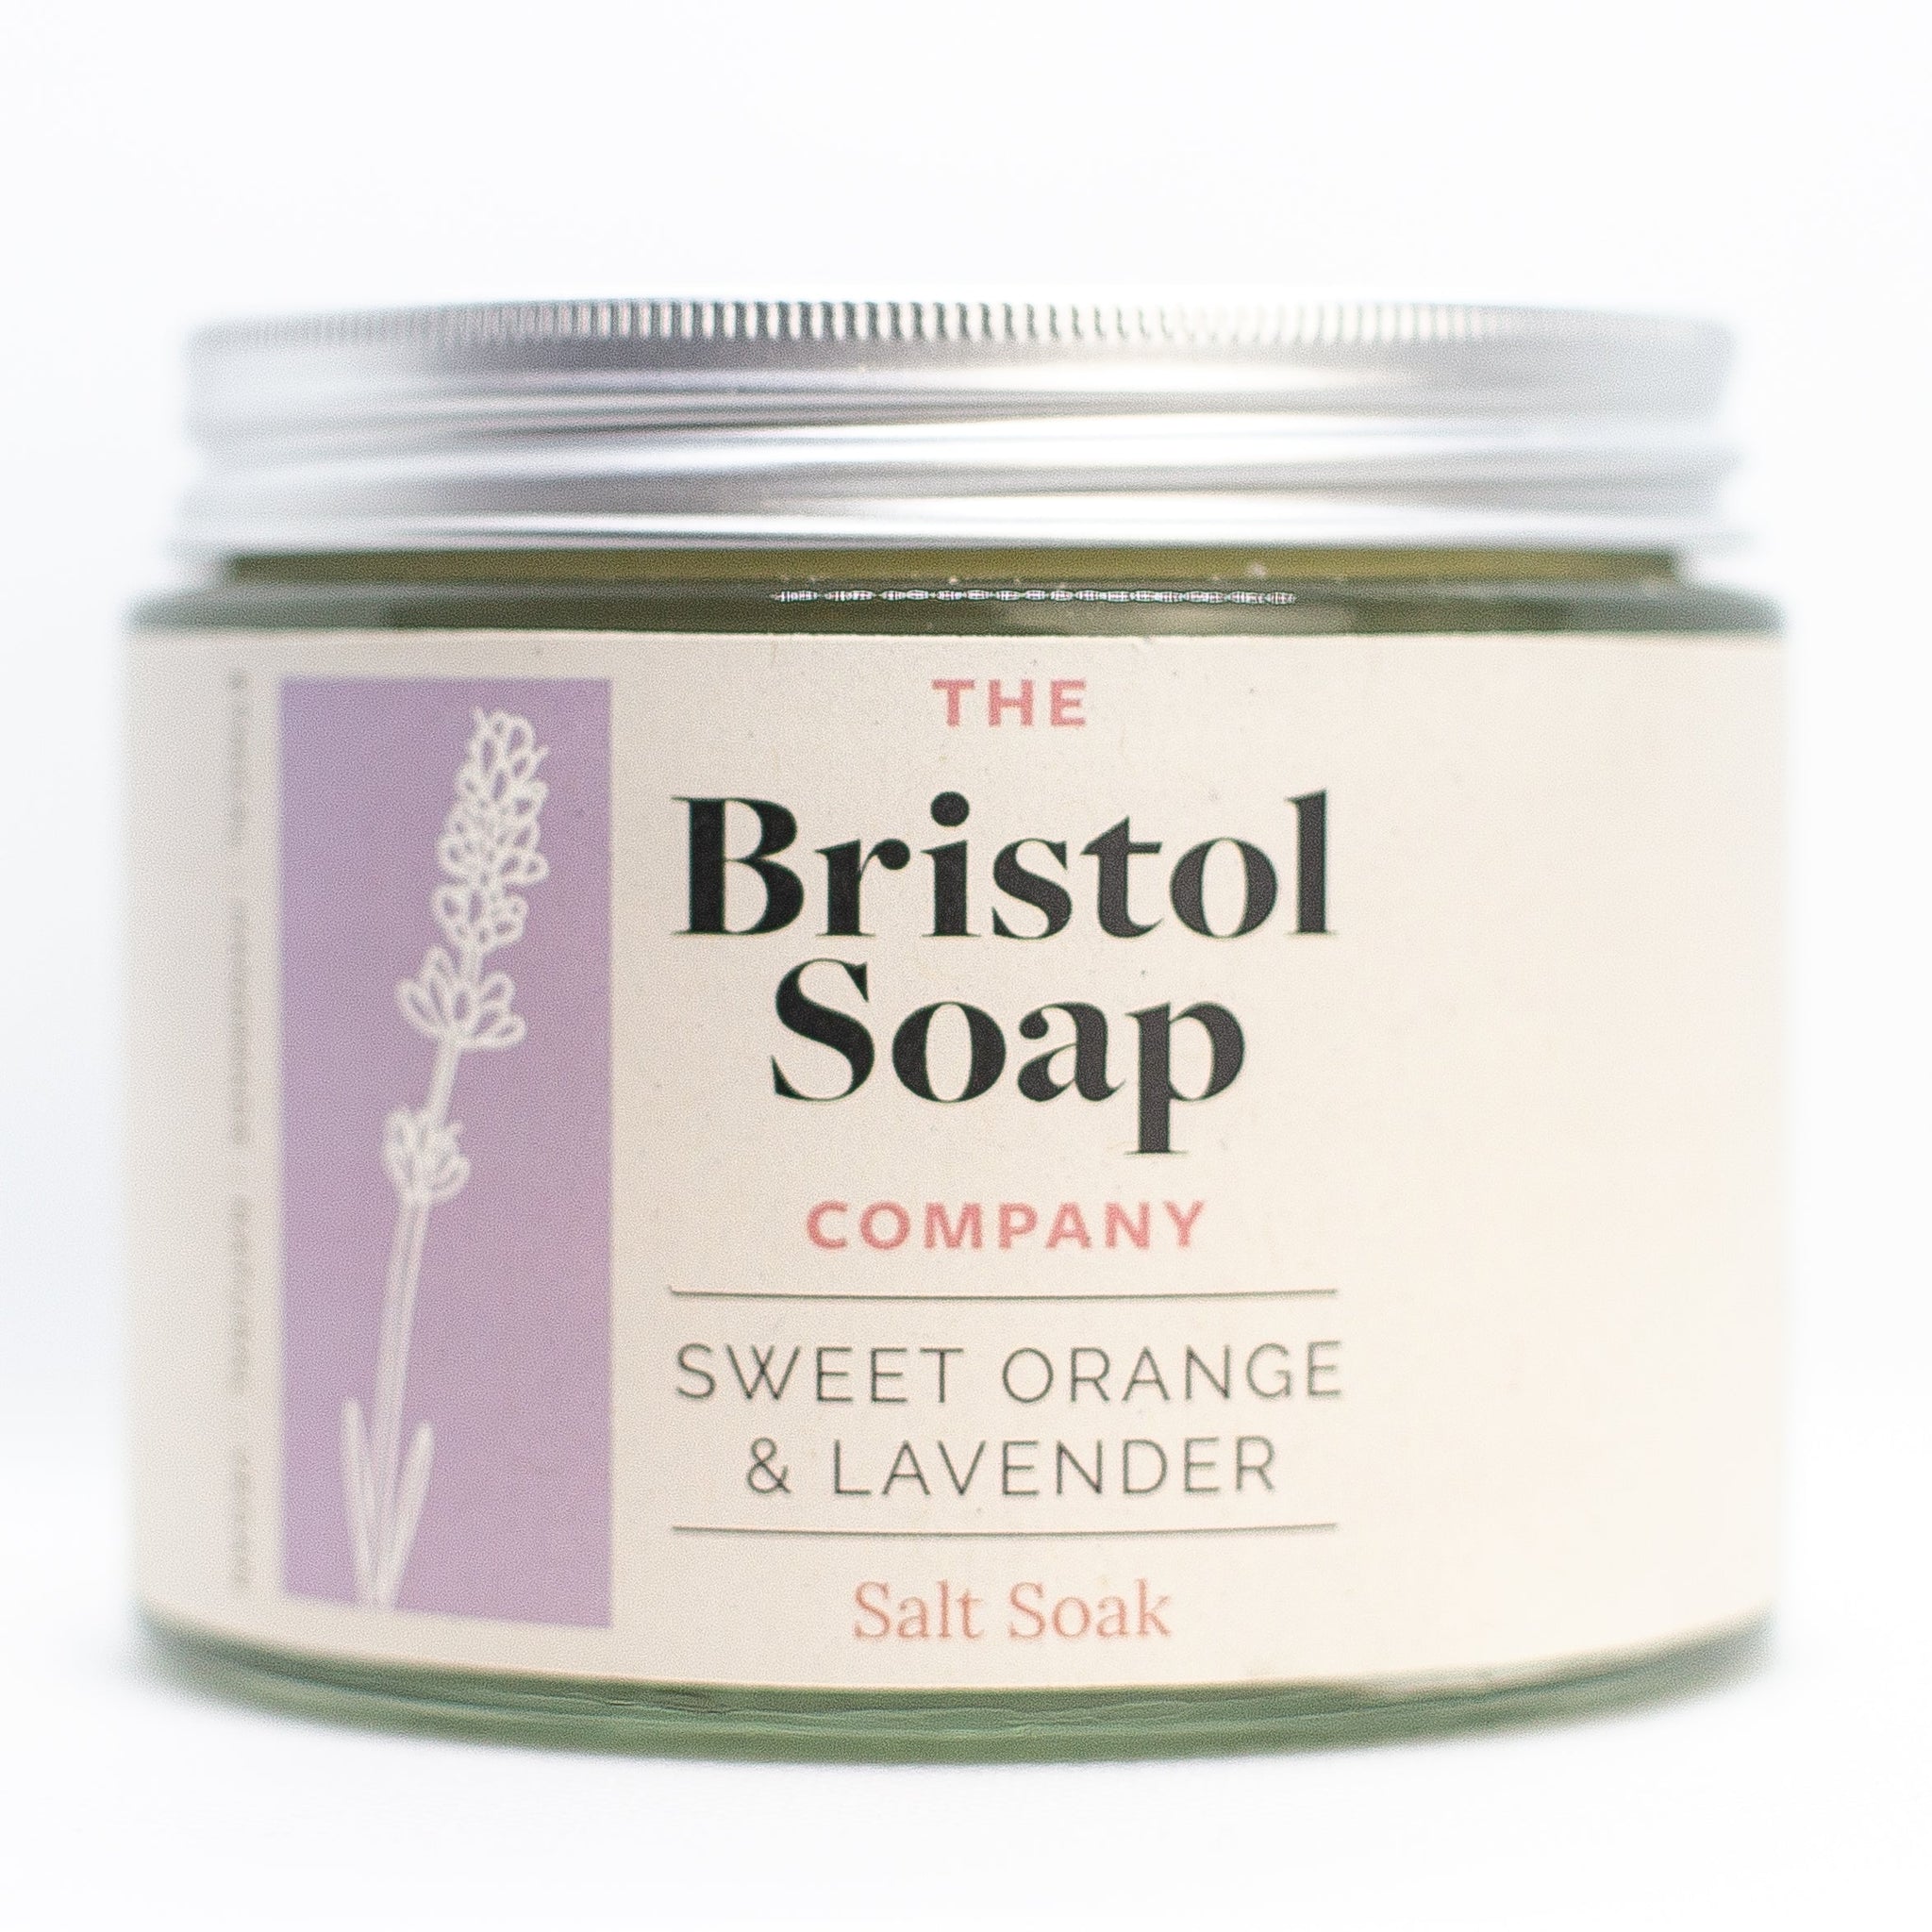 The Bristol Soap Company Sweet Orange and Lavender Salt Soak